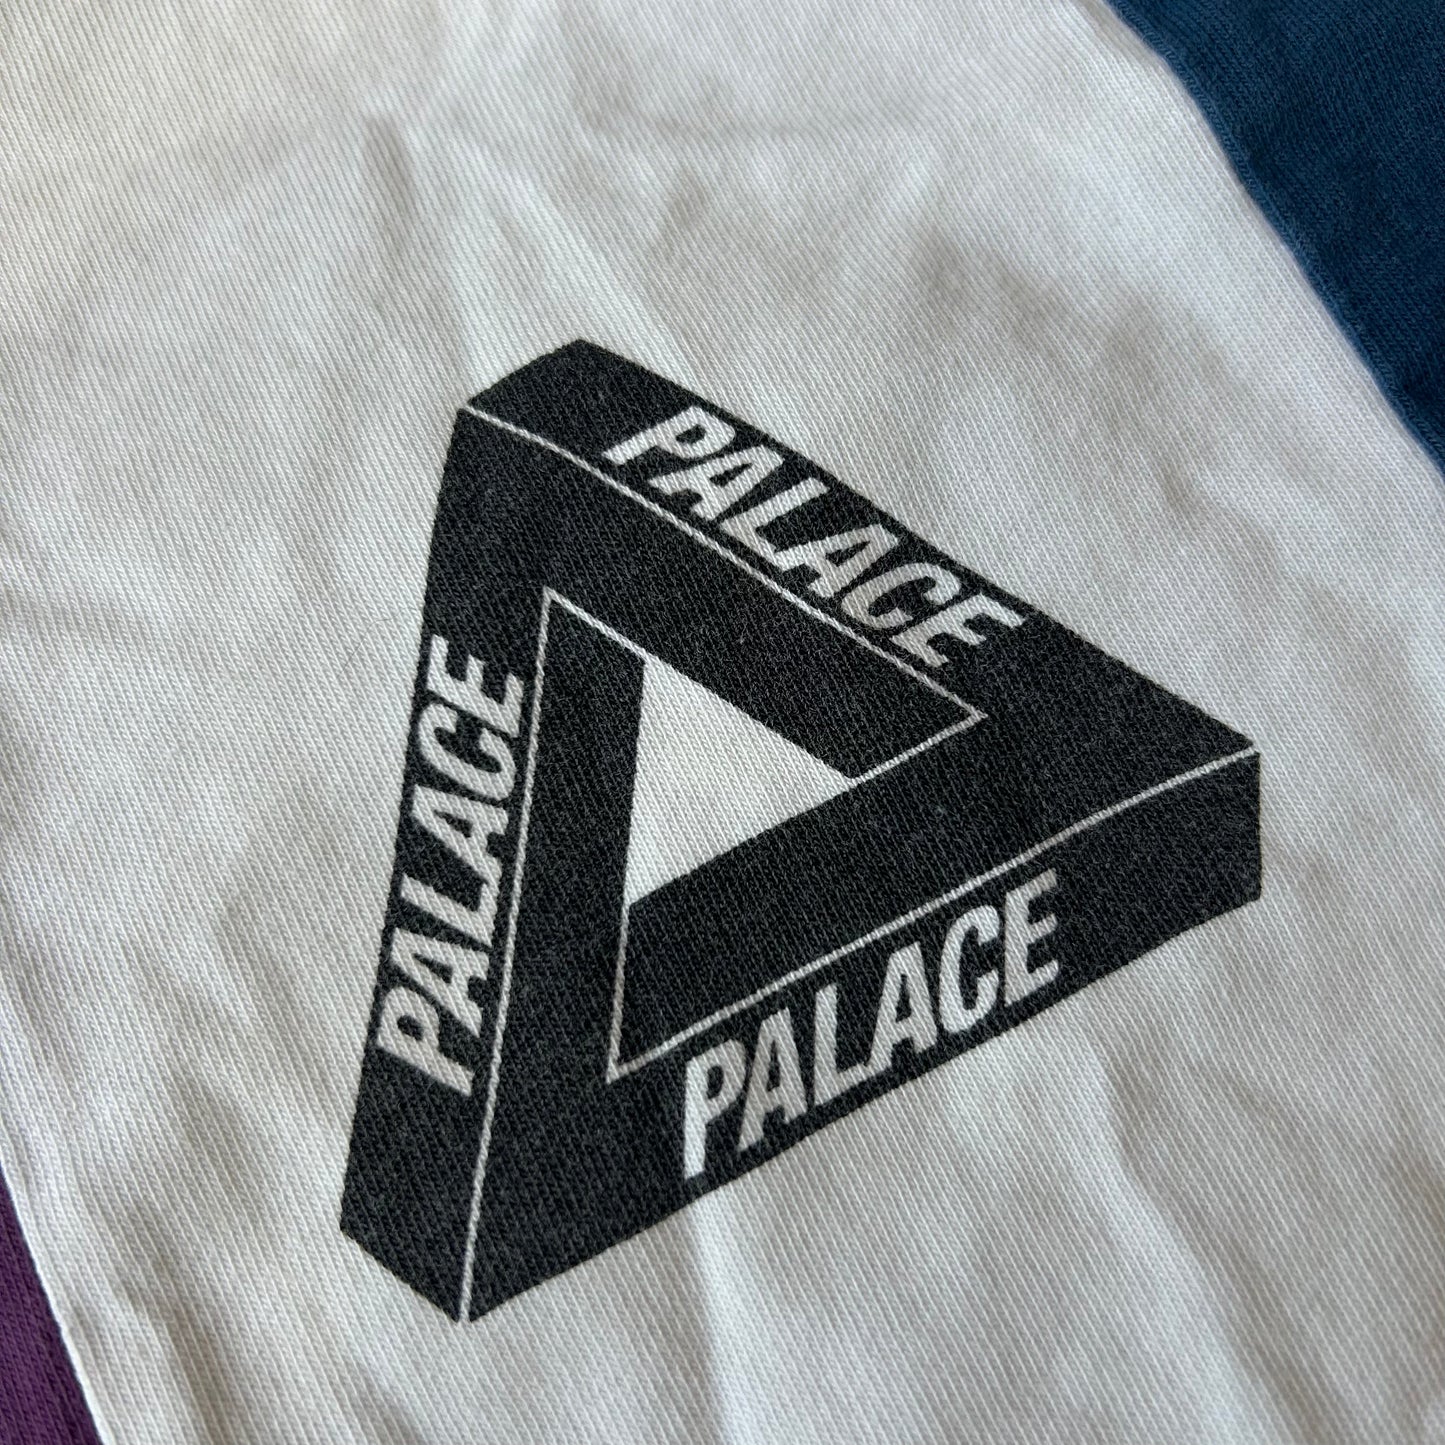 (USED) Palace Tri Logo Patchwork Tee (Size Medium)